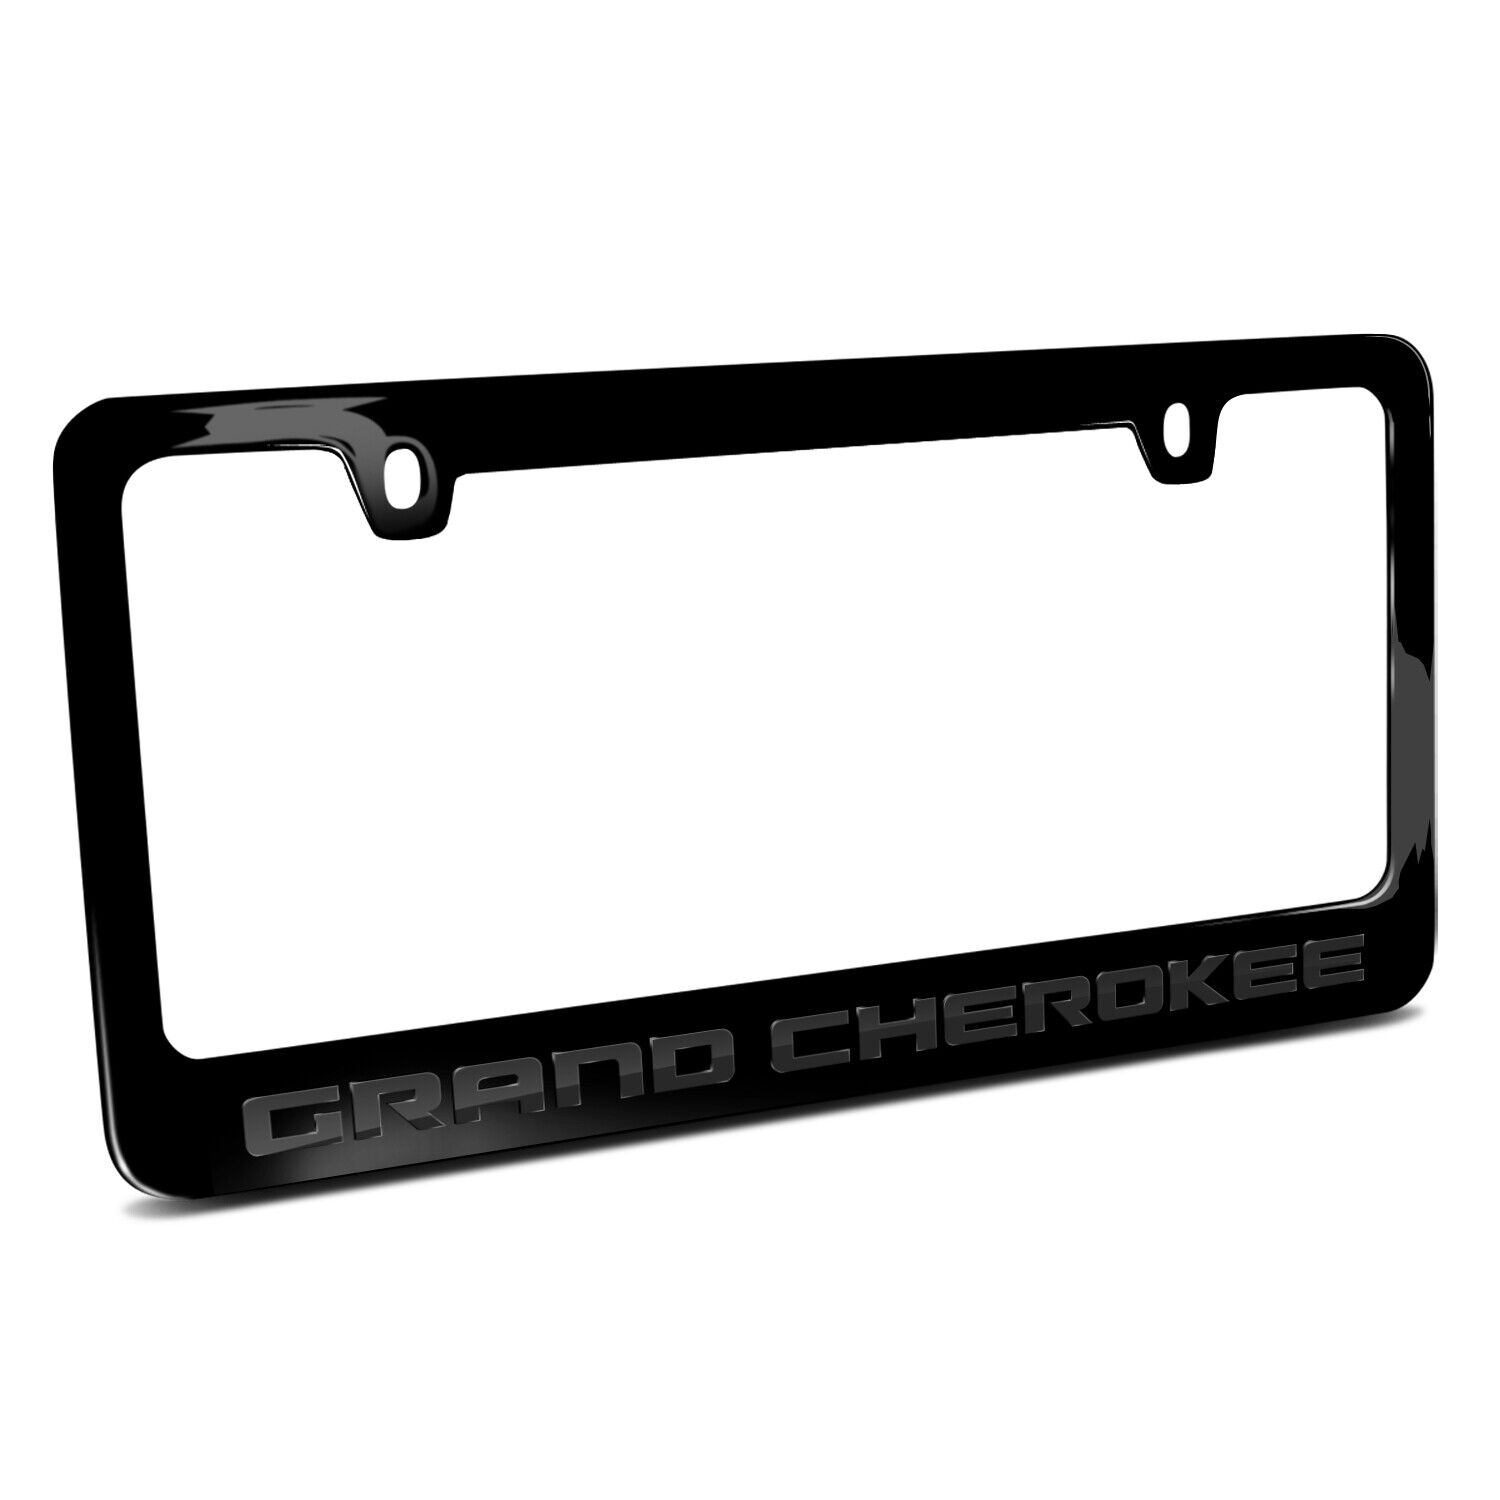 Jeep Grand Cherokee in 3D Dark Gray Letters on Black Metal License Plate Frame